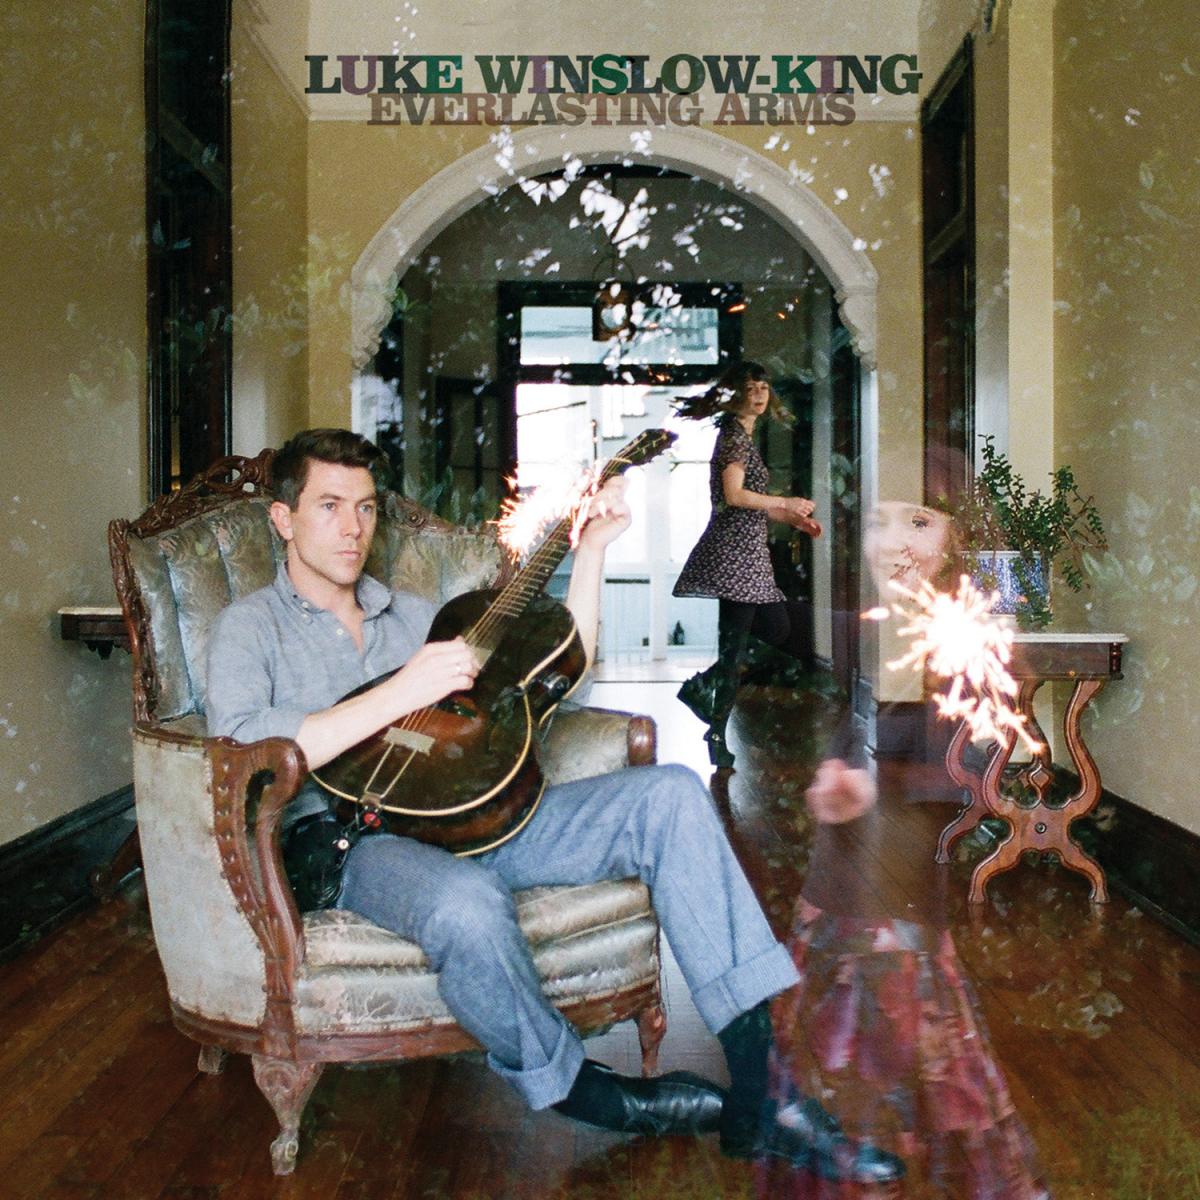 Luke Winslow-King Everlasting Arms